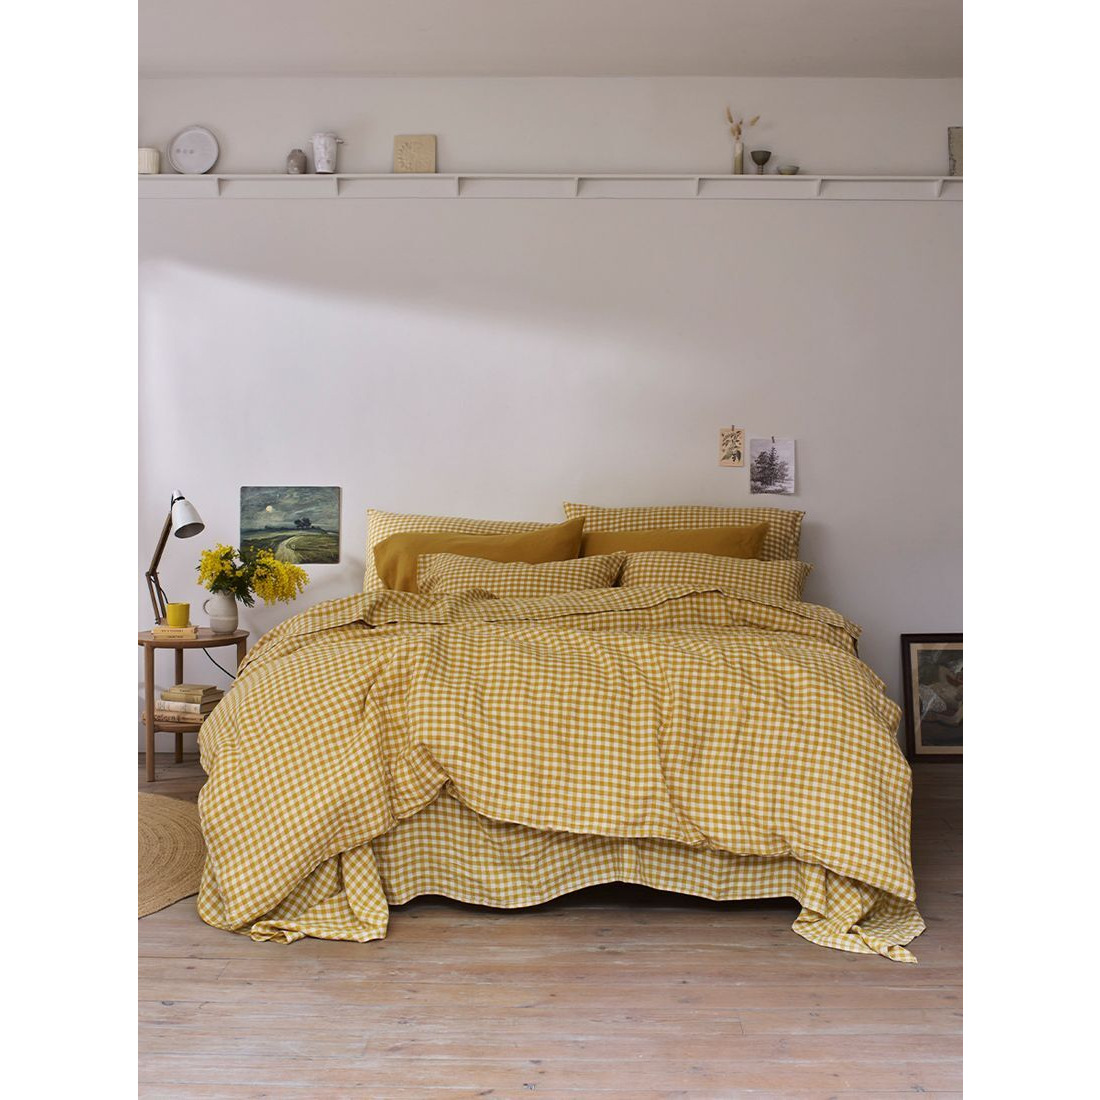 Piglet in Bed Gingham Linen Flat Sheet - image 1